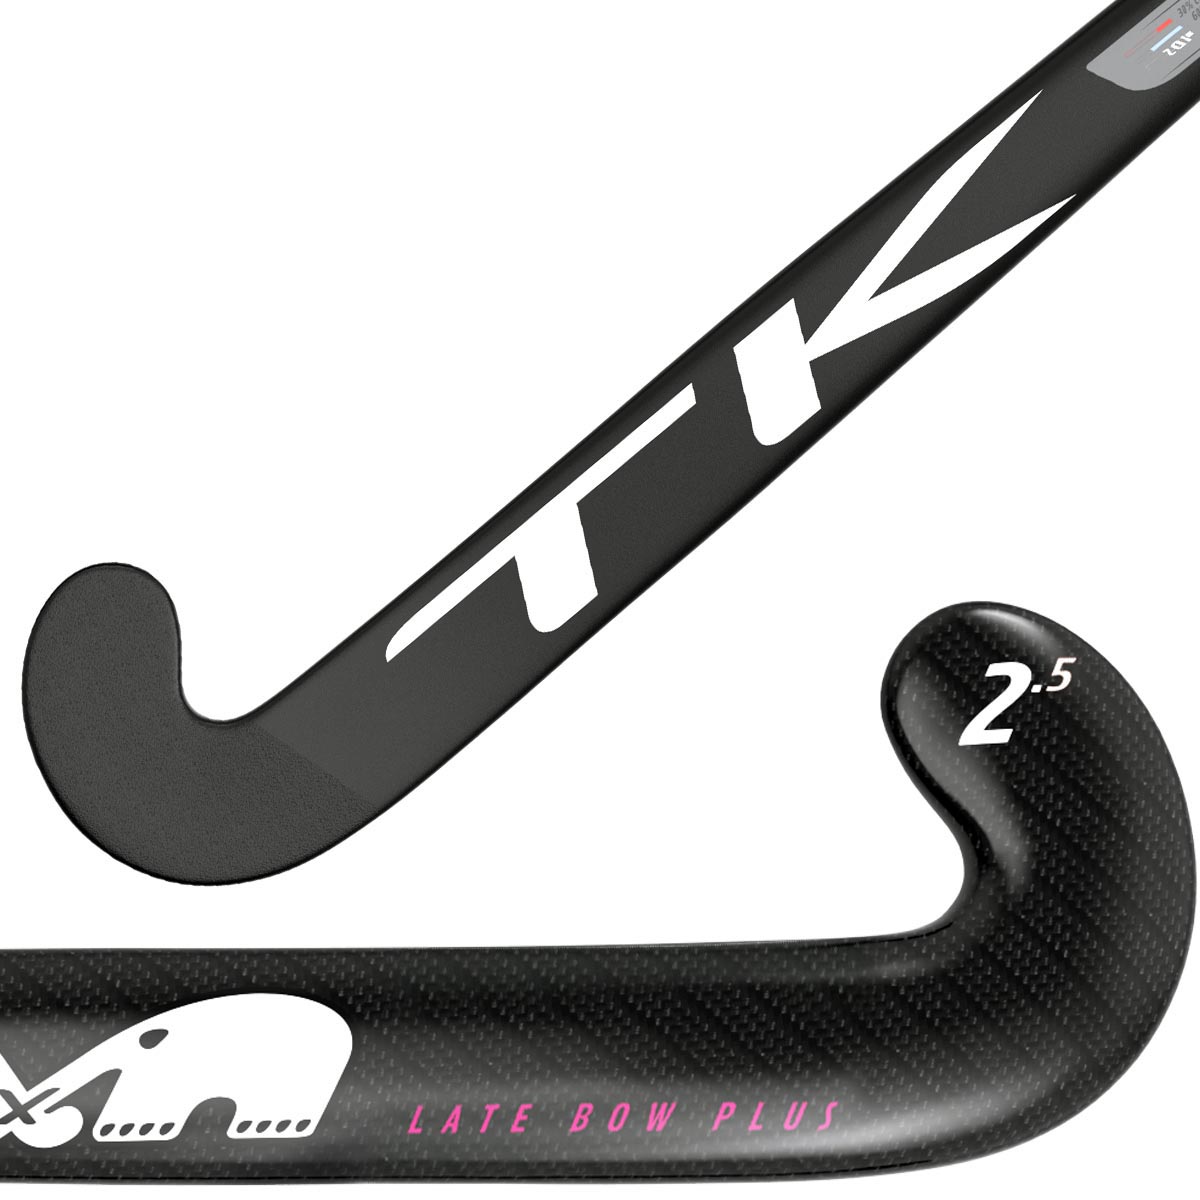 De Kamer mentaal gracht Indoor Field Hockey Sticks New Jersey | TK, Dita, Gryphon Sticks